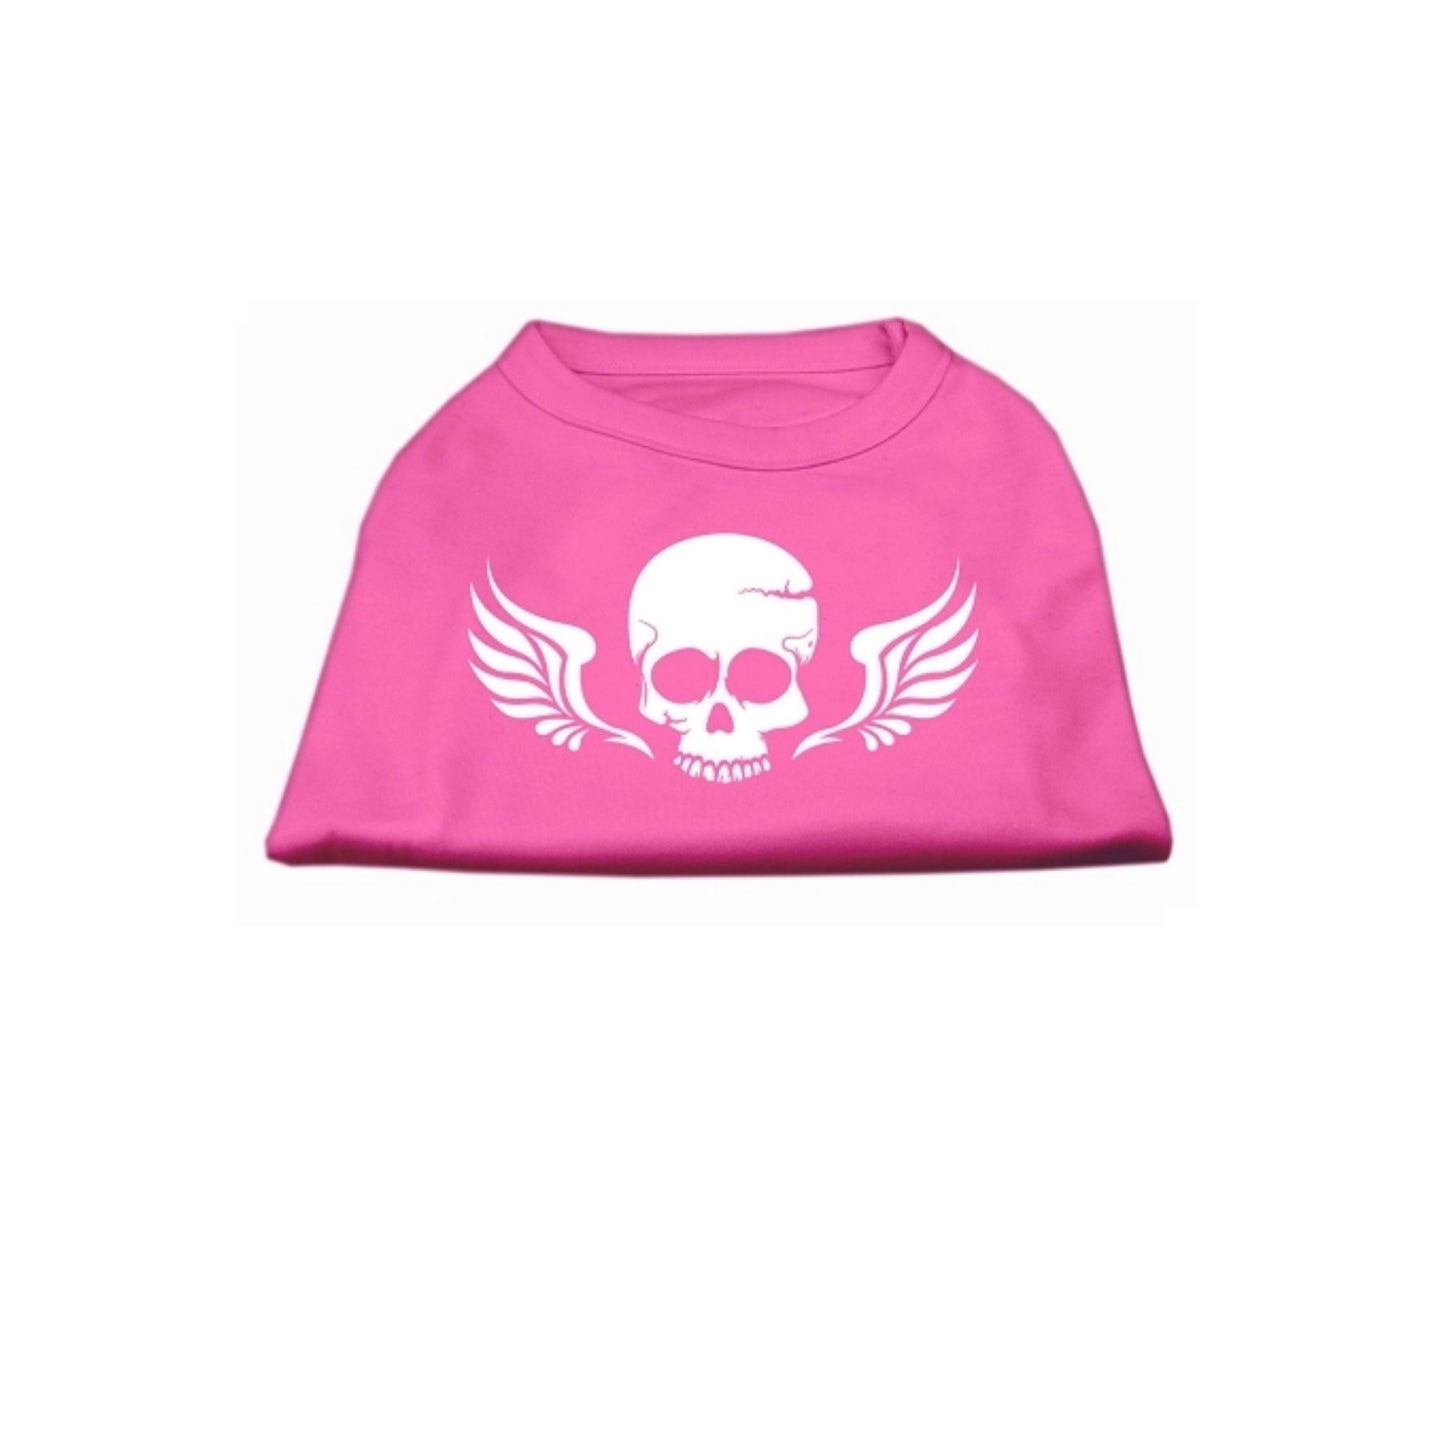 Skull And Wings Pet Shirt pink